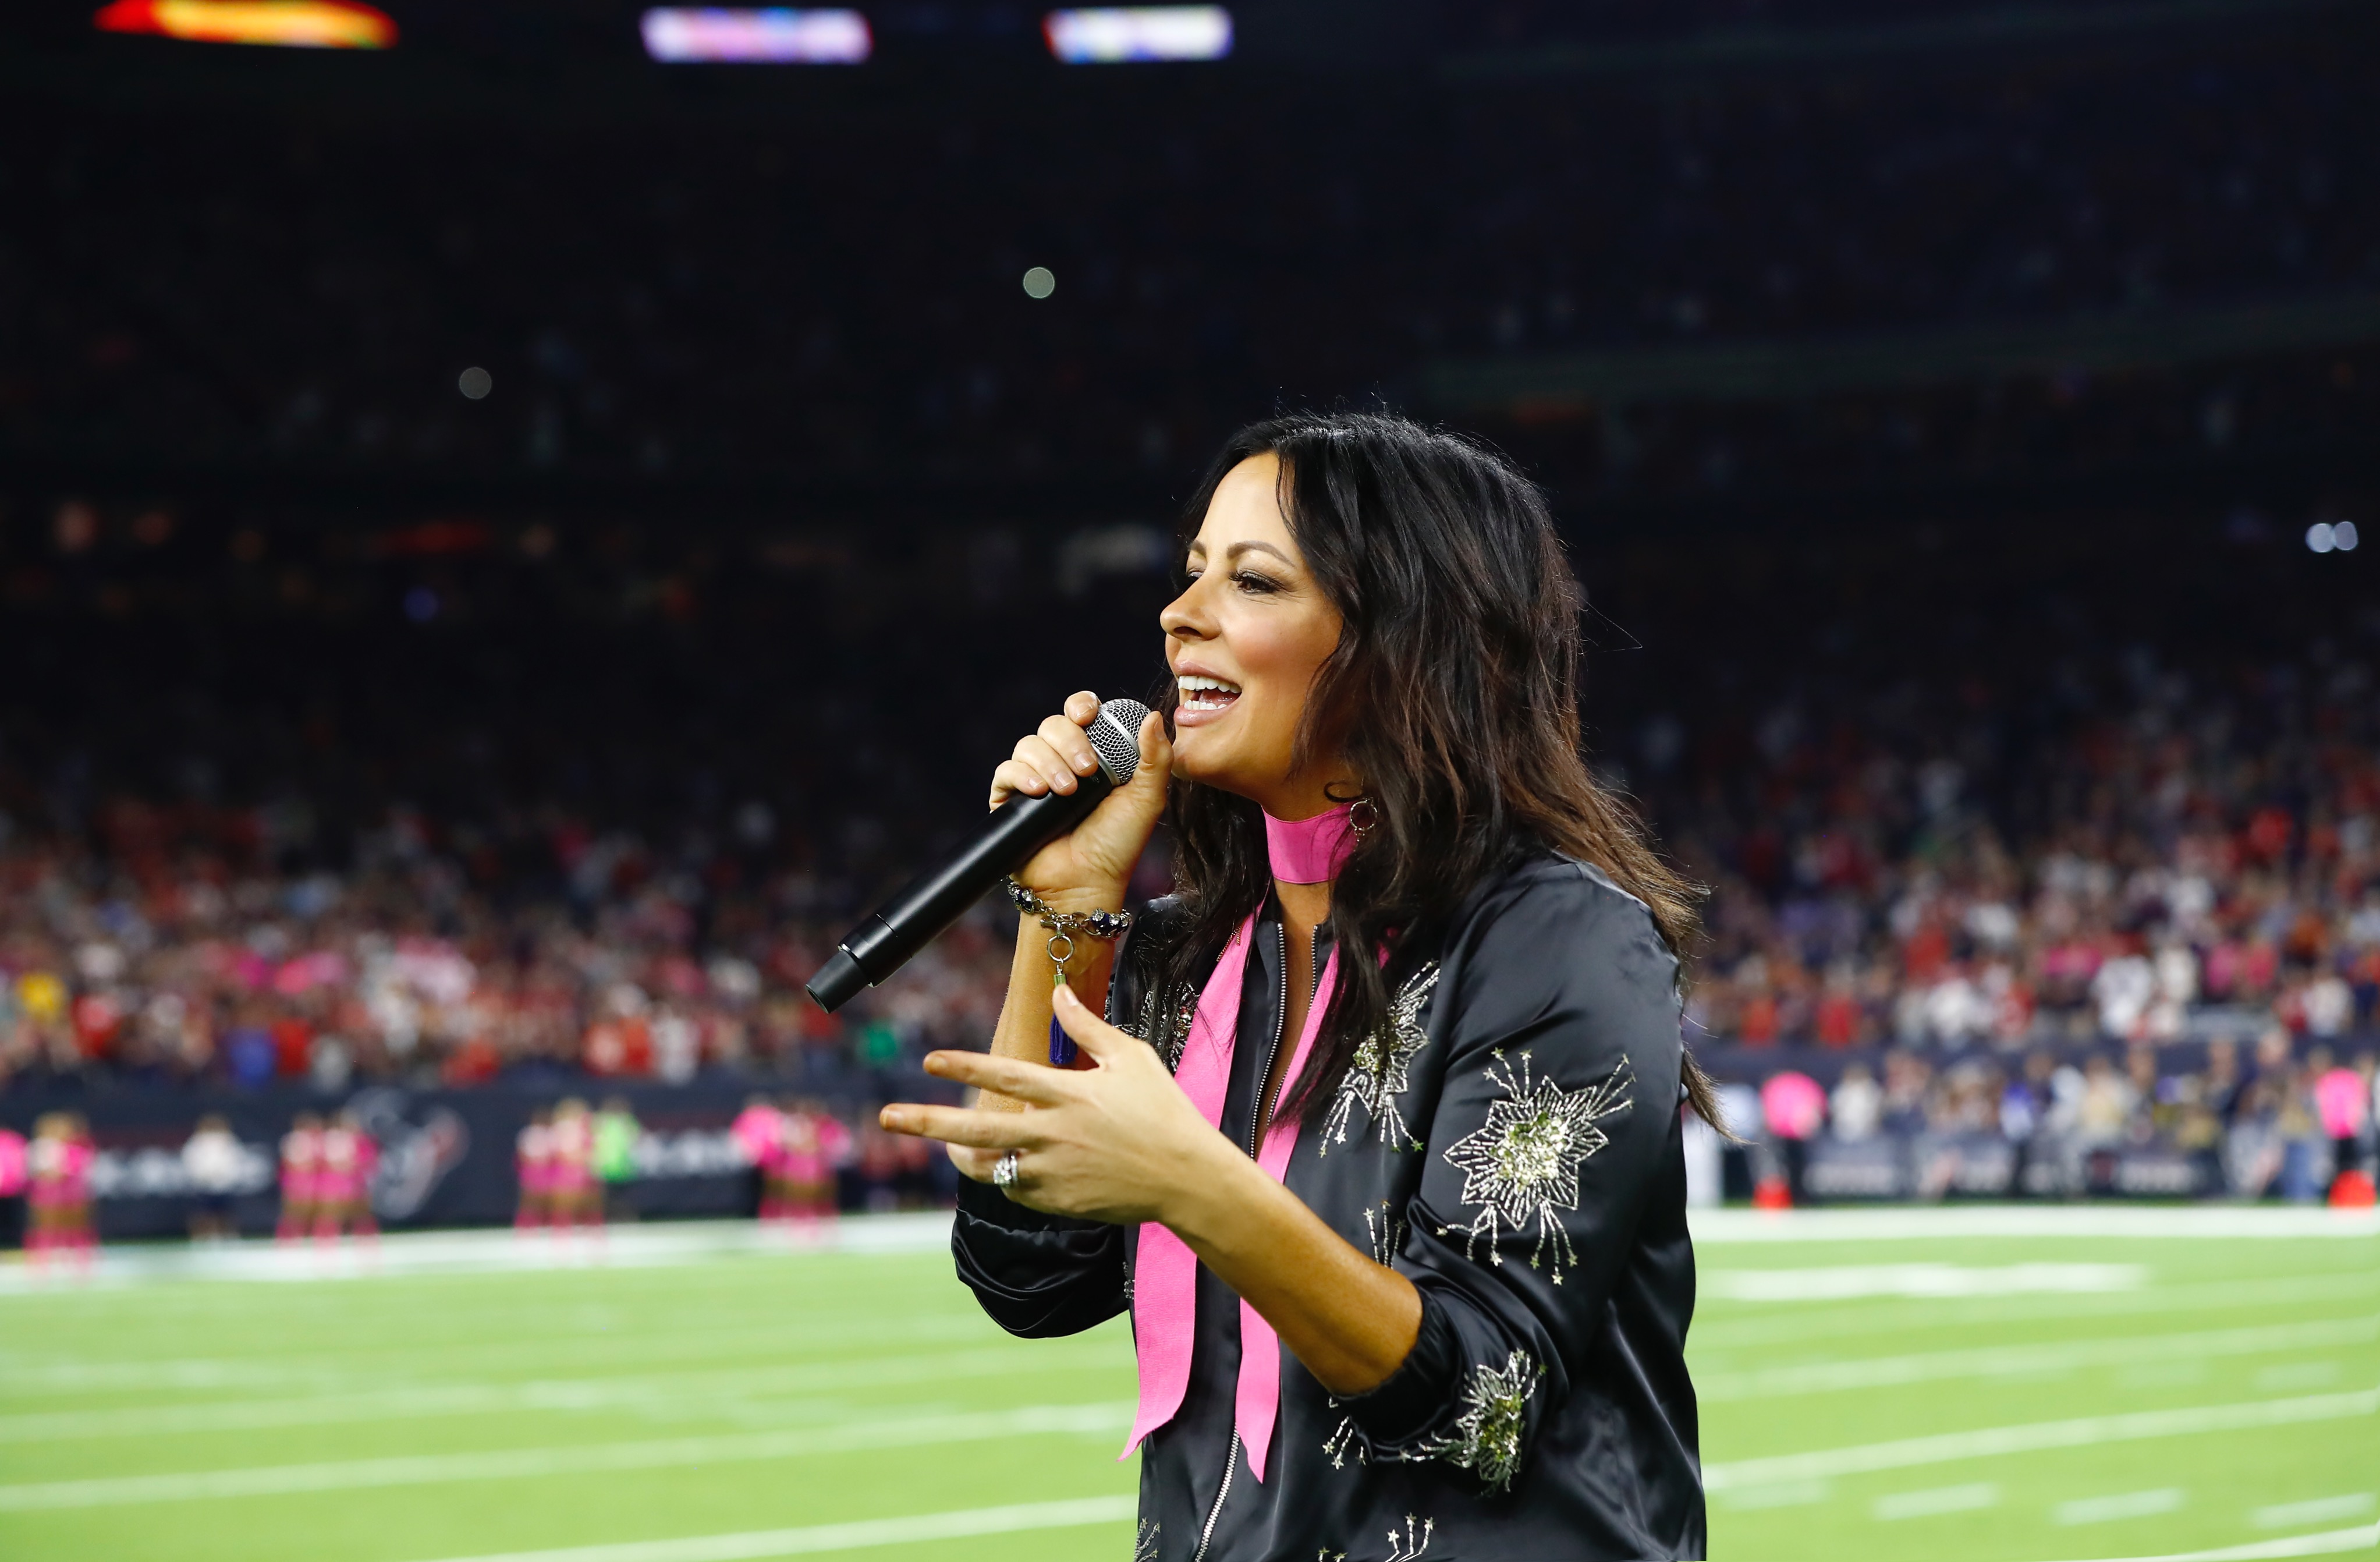 WATCH: Sara Evans Sings National Anthem at Houston Texans vs Kansas City Chiefs Game